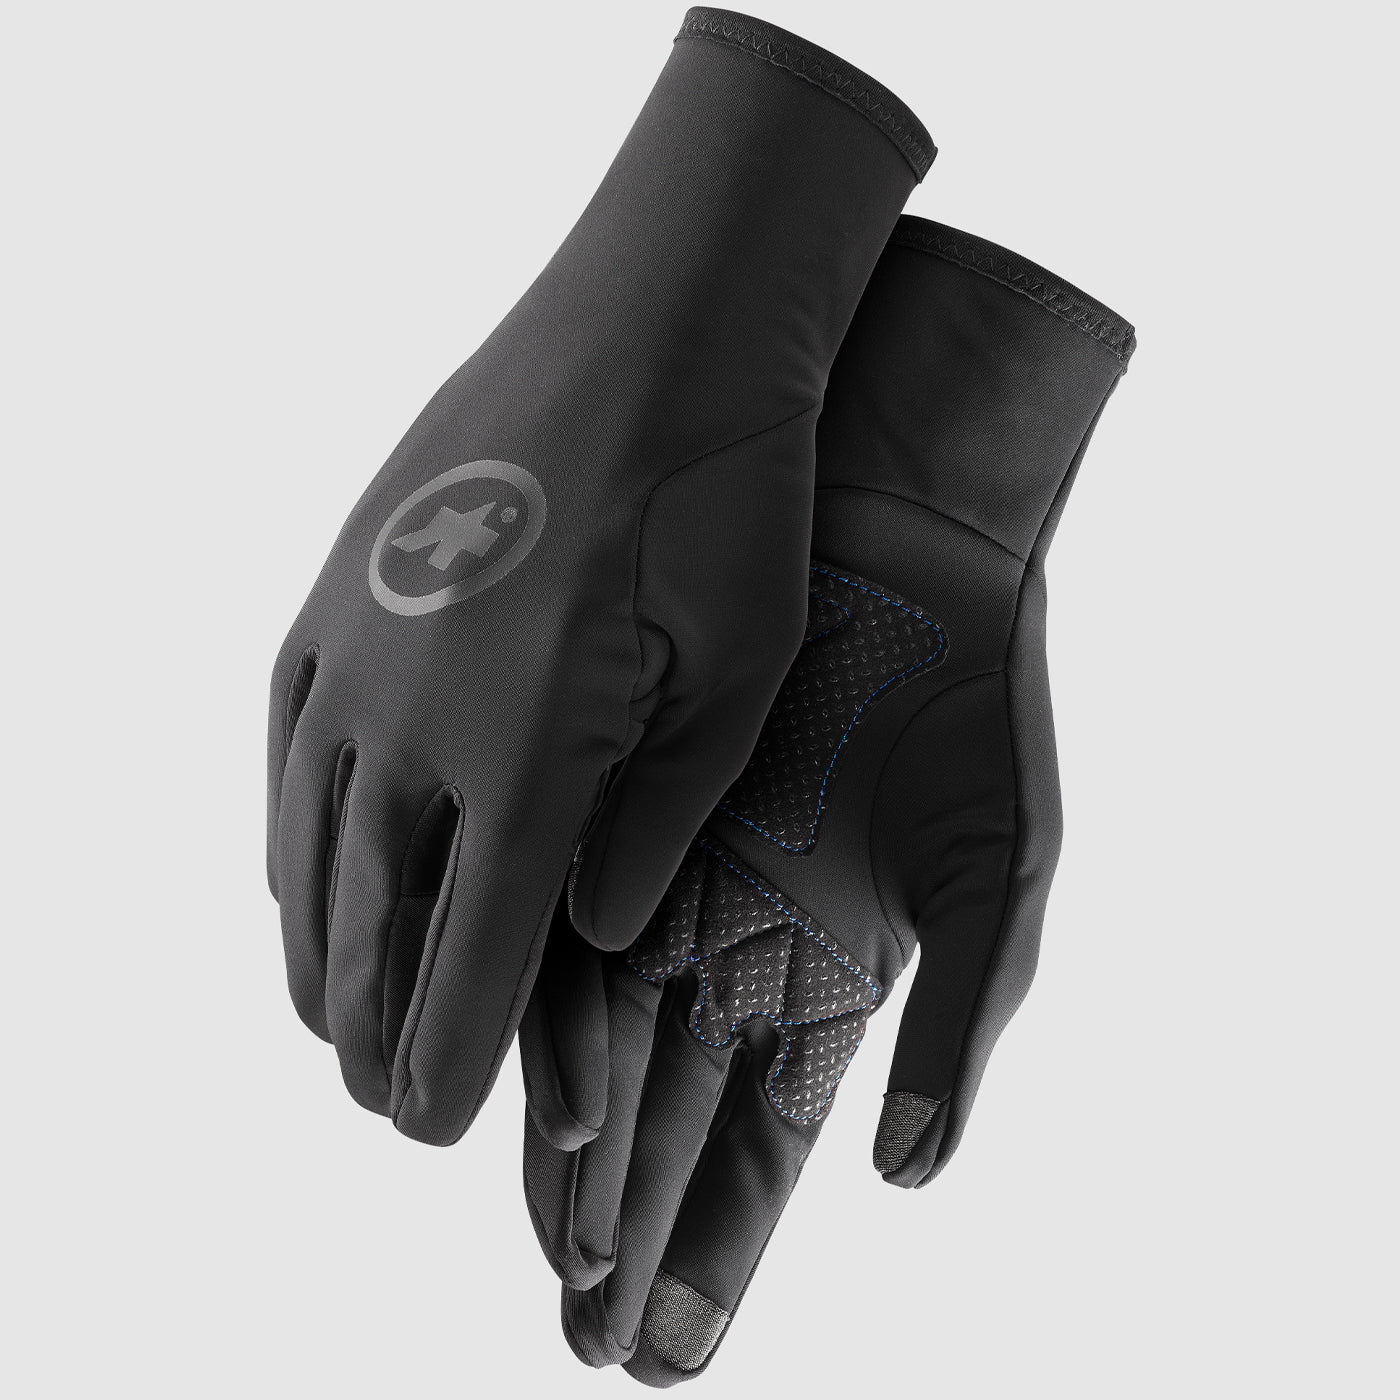 Assos Winter Evo gloves - Black